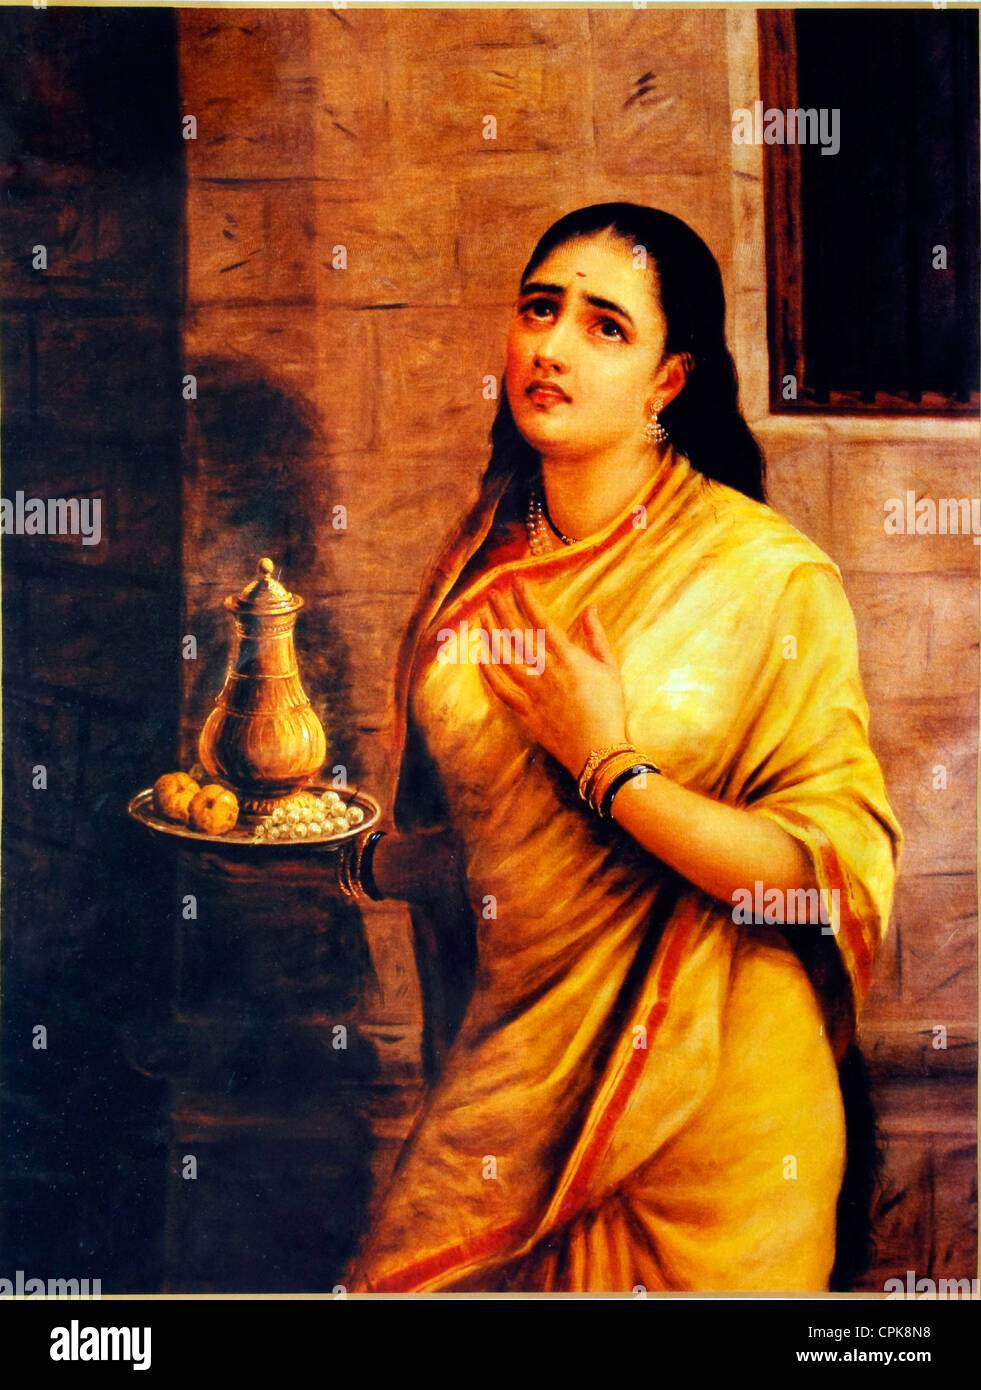 A painting by Raja Ravi Varma - Sairandhri - Draupadi in disguise Stock Photo